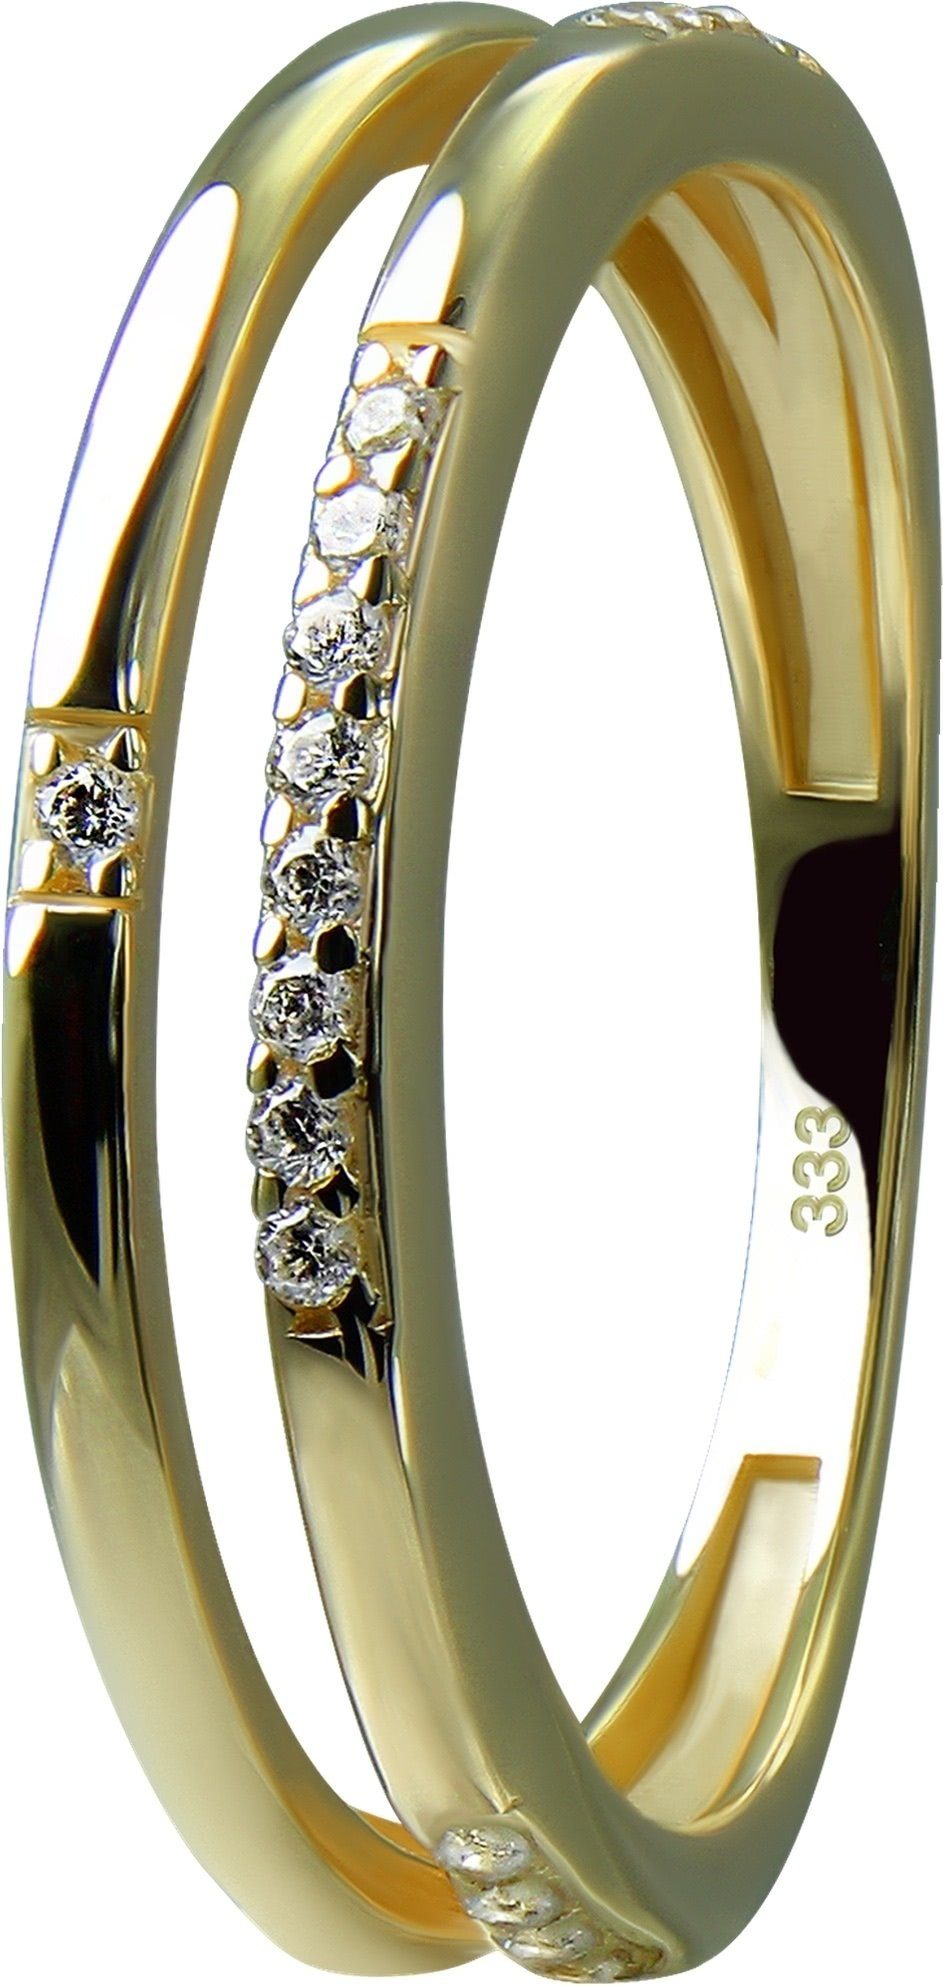 GoldDream Goldring GoldDream Gold Ring Double Gr.54 (Fingerring), Damen Ring Double 333 Gelbgold - 8 Karat, Farbe: gold, weiß